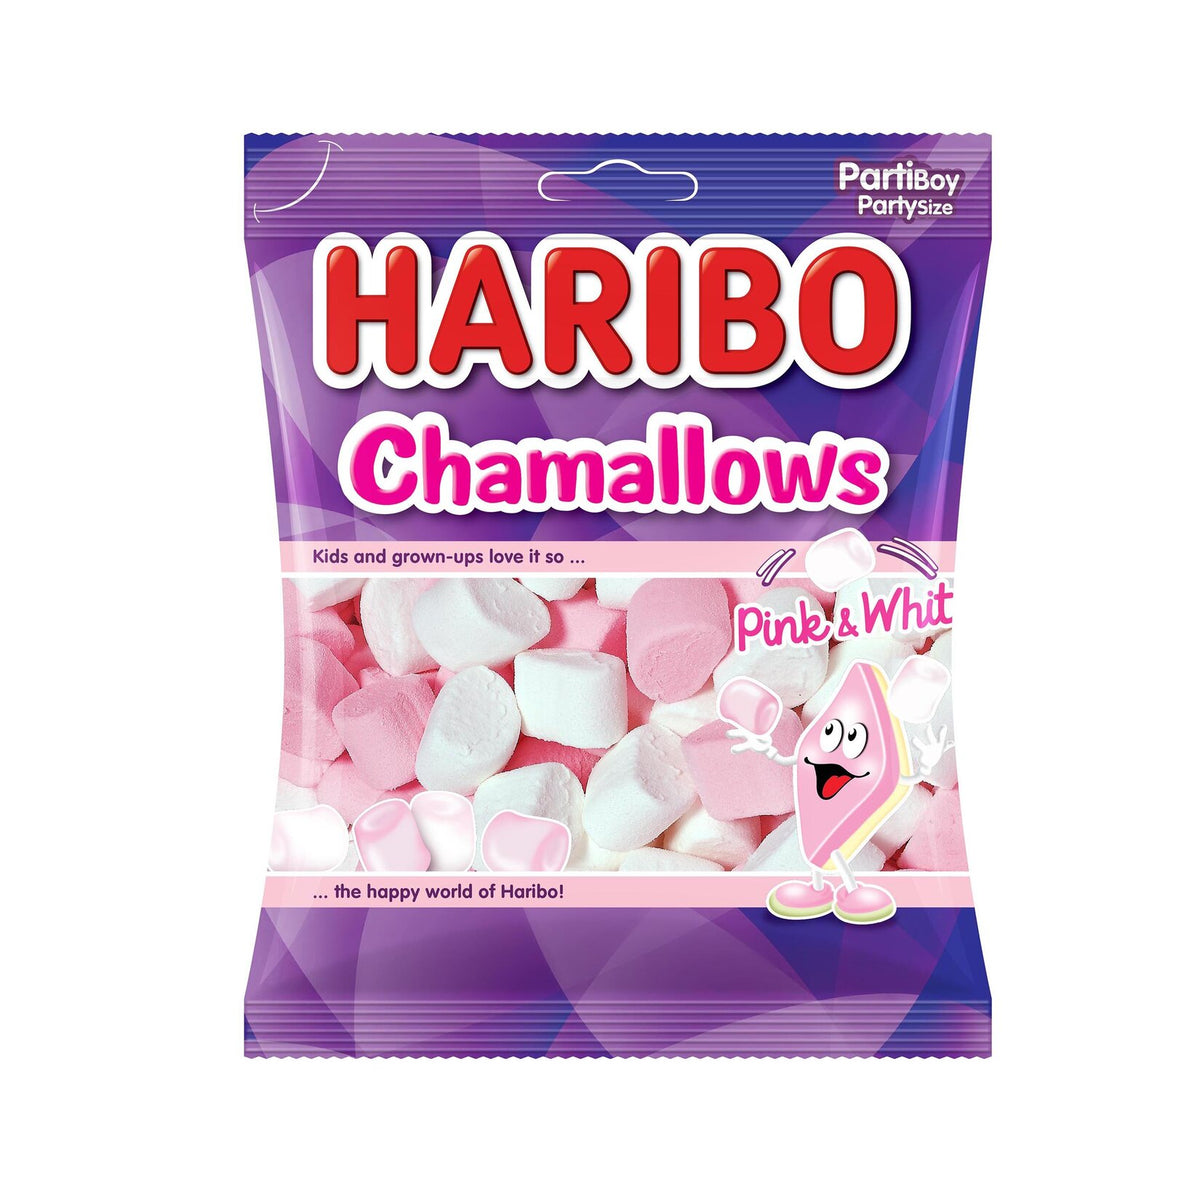 Chamallow - Haribo – French Wink